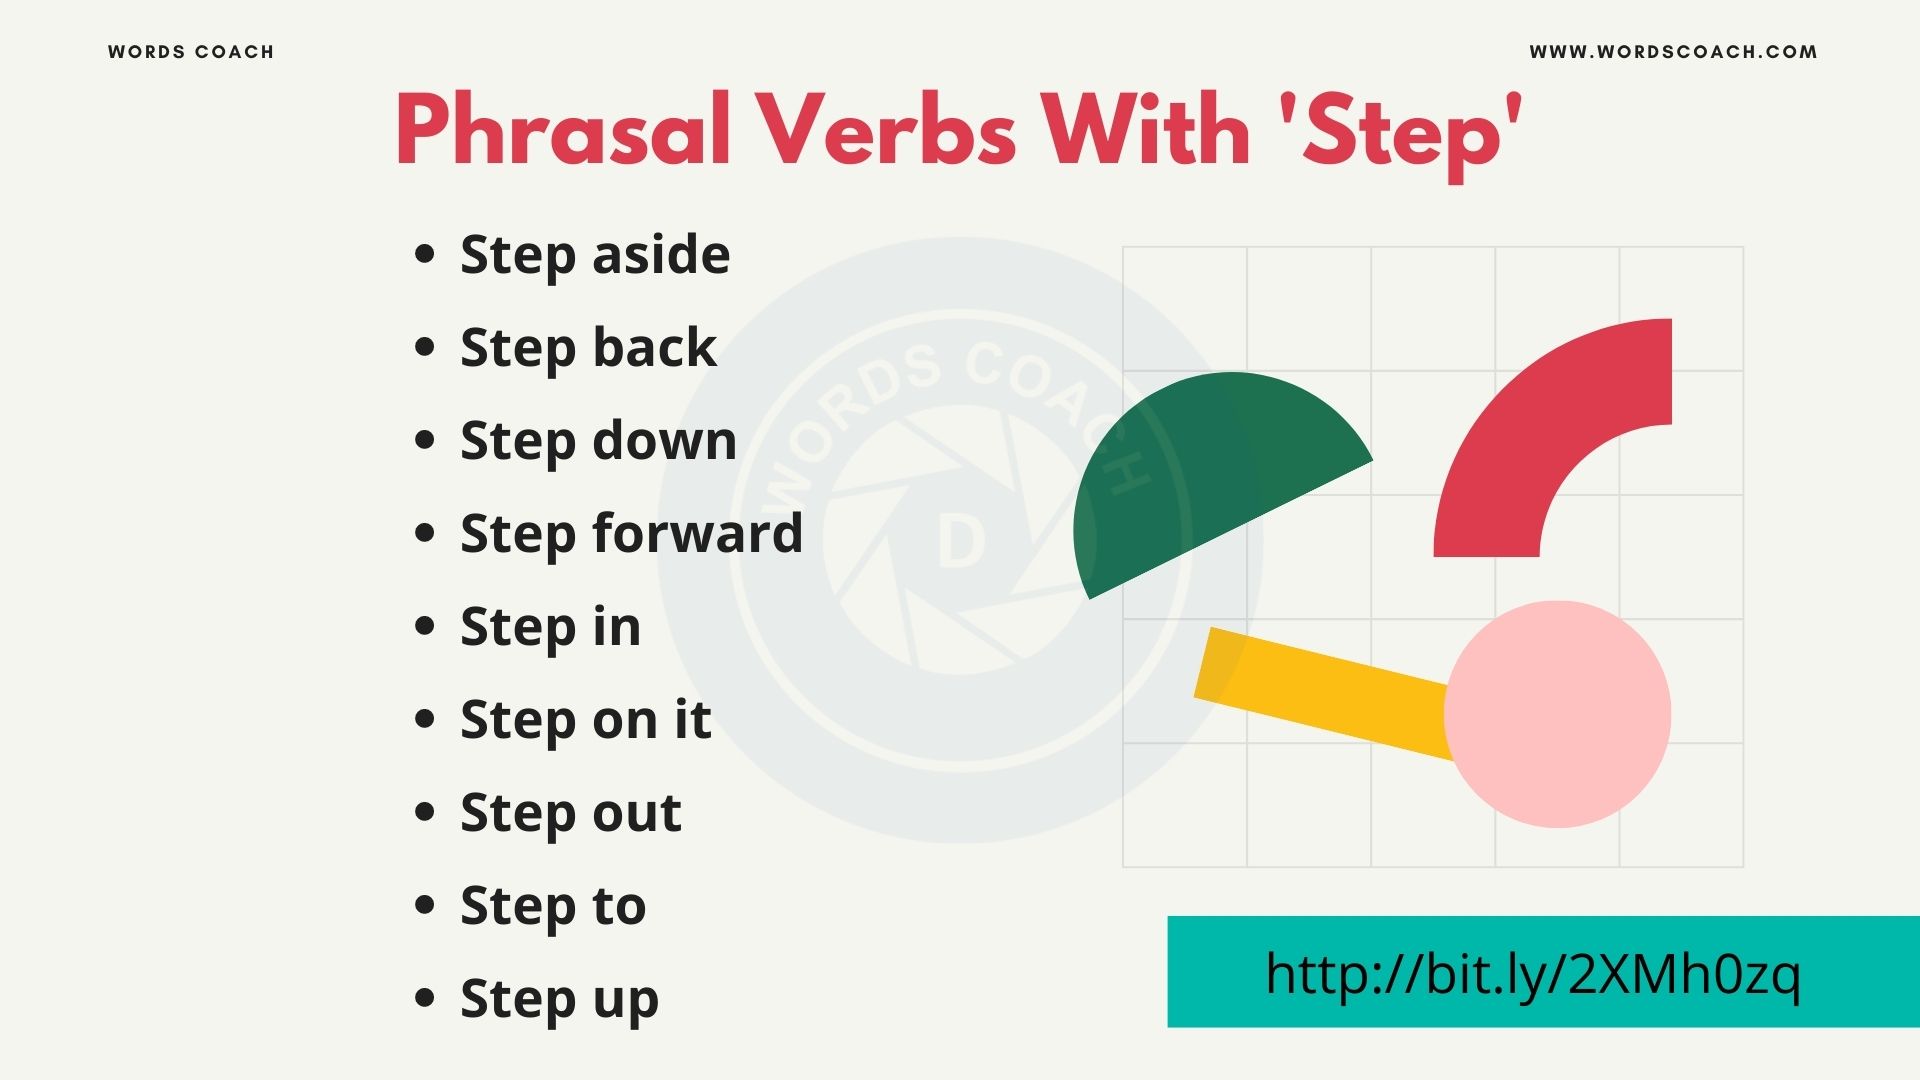 Phrasal Verbs With 'Step' - wordscoach.com